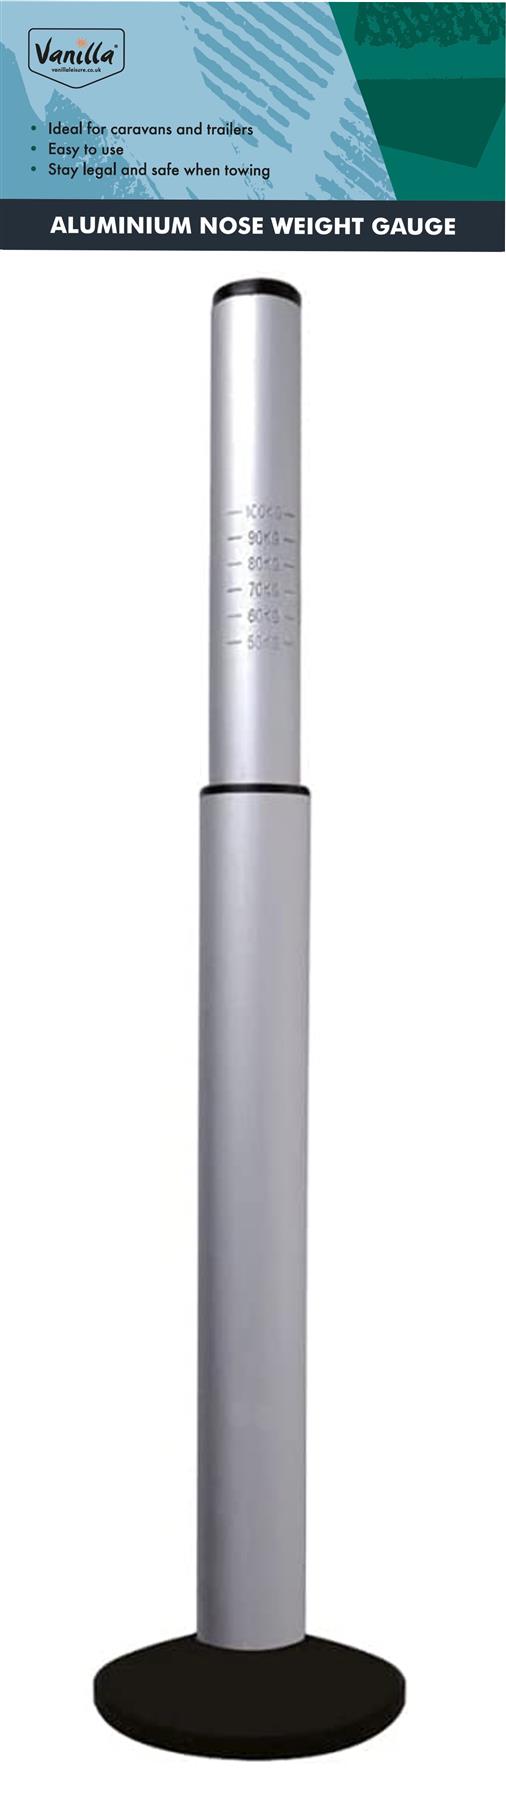 Vanilla Leisure Nose weight gauge aluminium with plastic feet